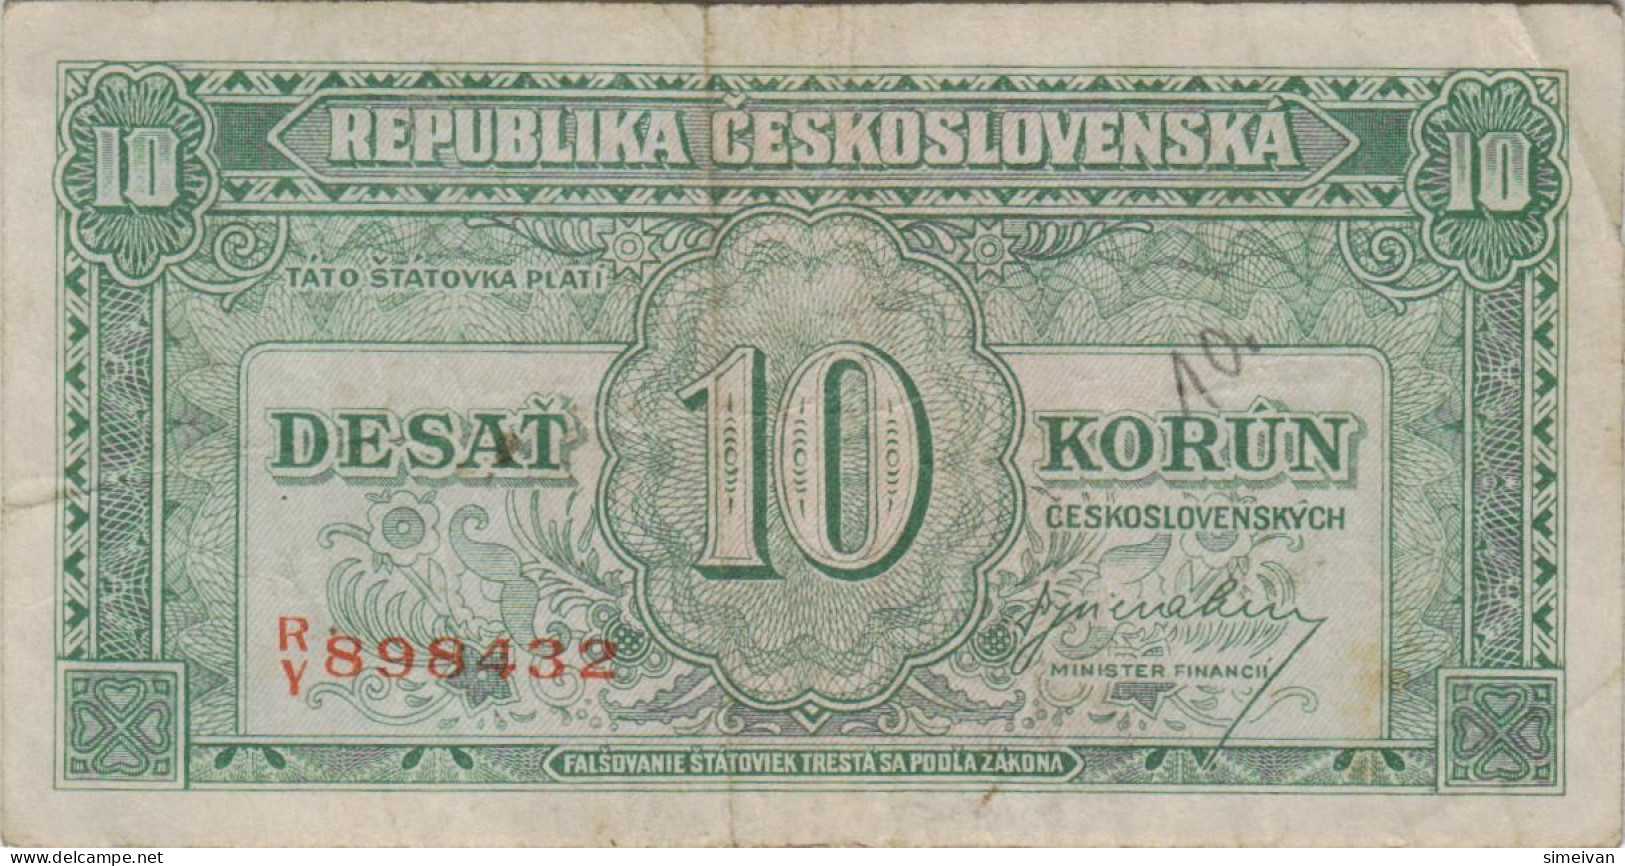 Czechoslovakia 10 Korun ND (1945) P-60a Banknote Europe Currency Tchécoslovaquie Tschechoslowakei #5227 - Checoslovaquia